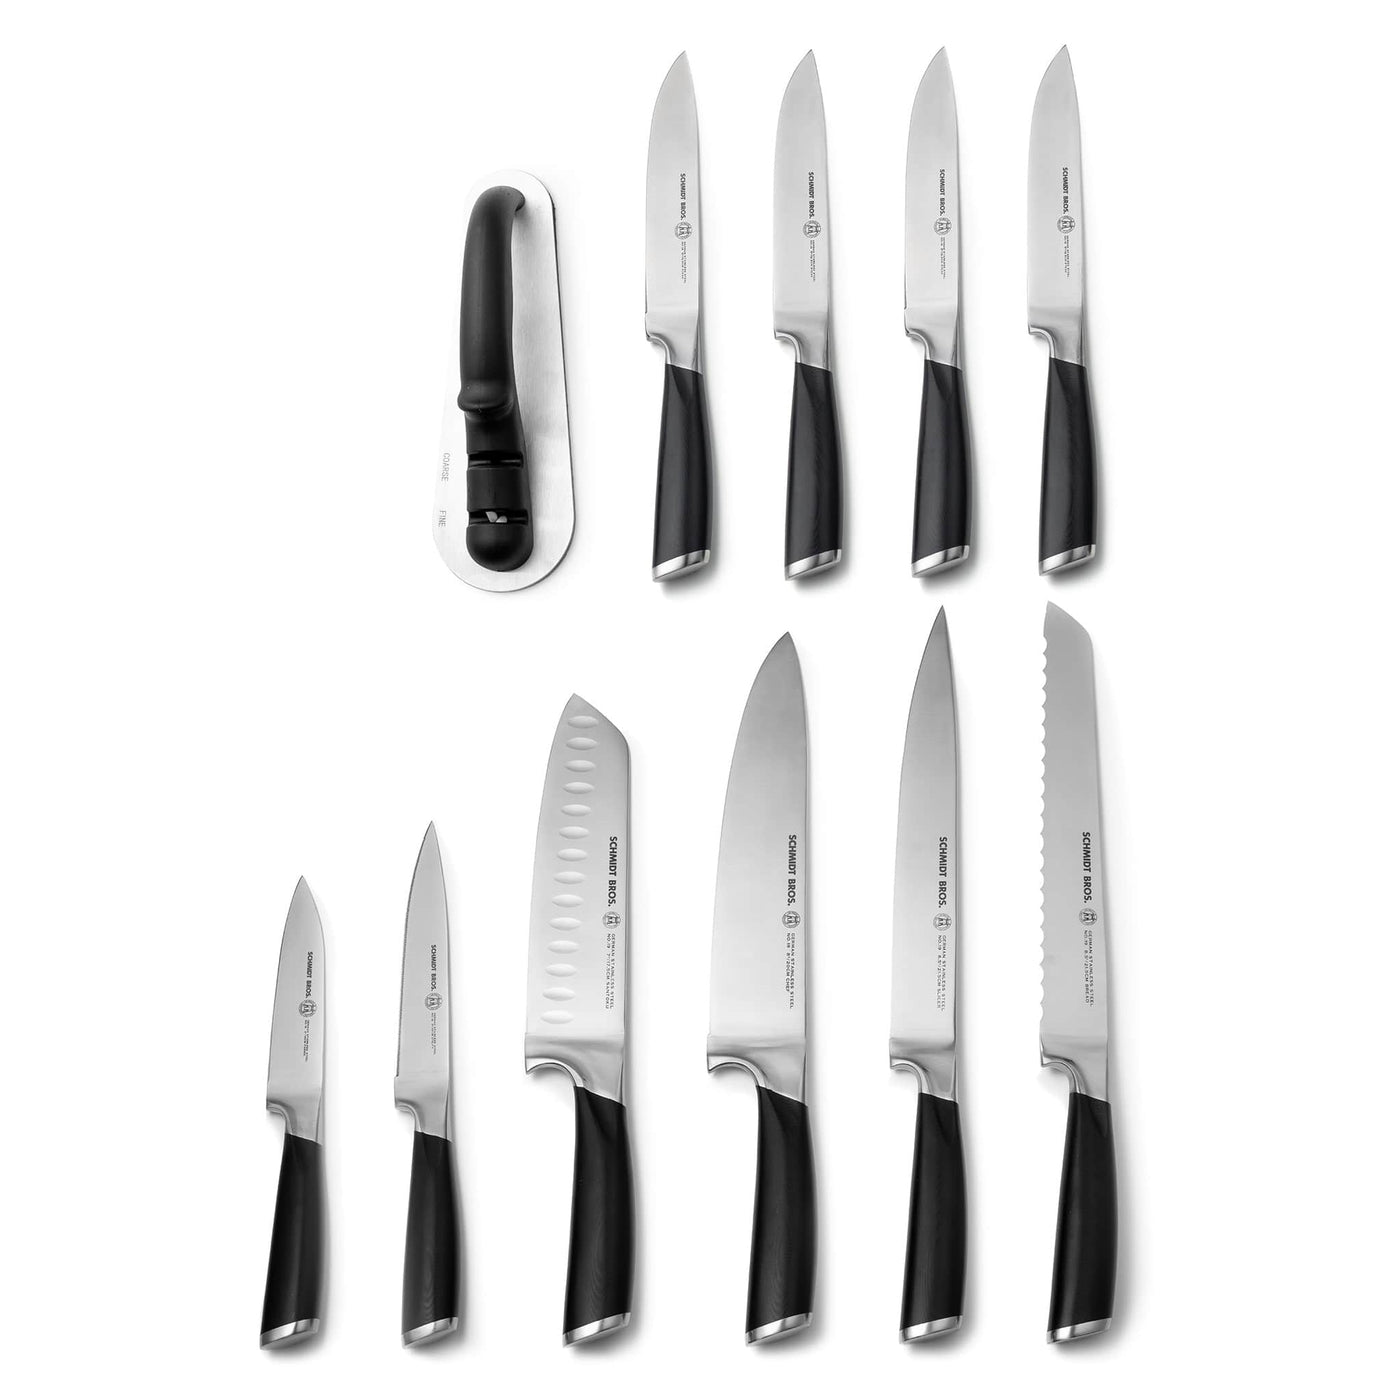 Forged Knives, Knife Block Set, 12 pc Knife Set